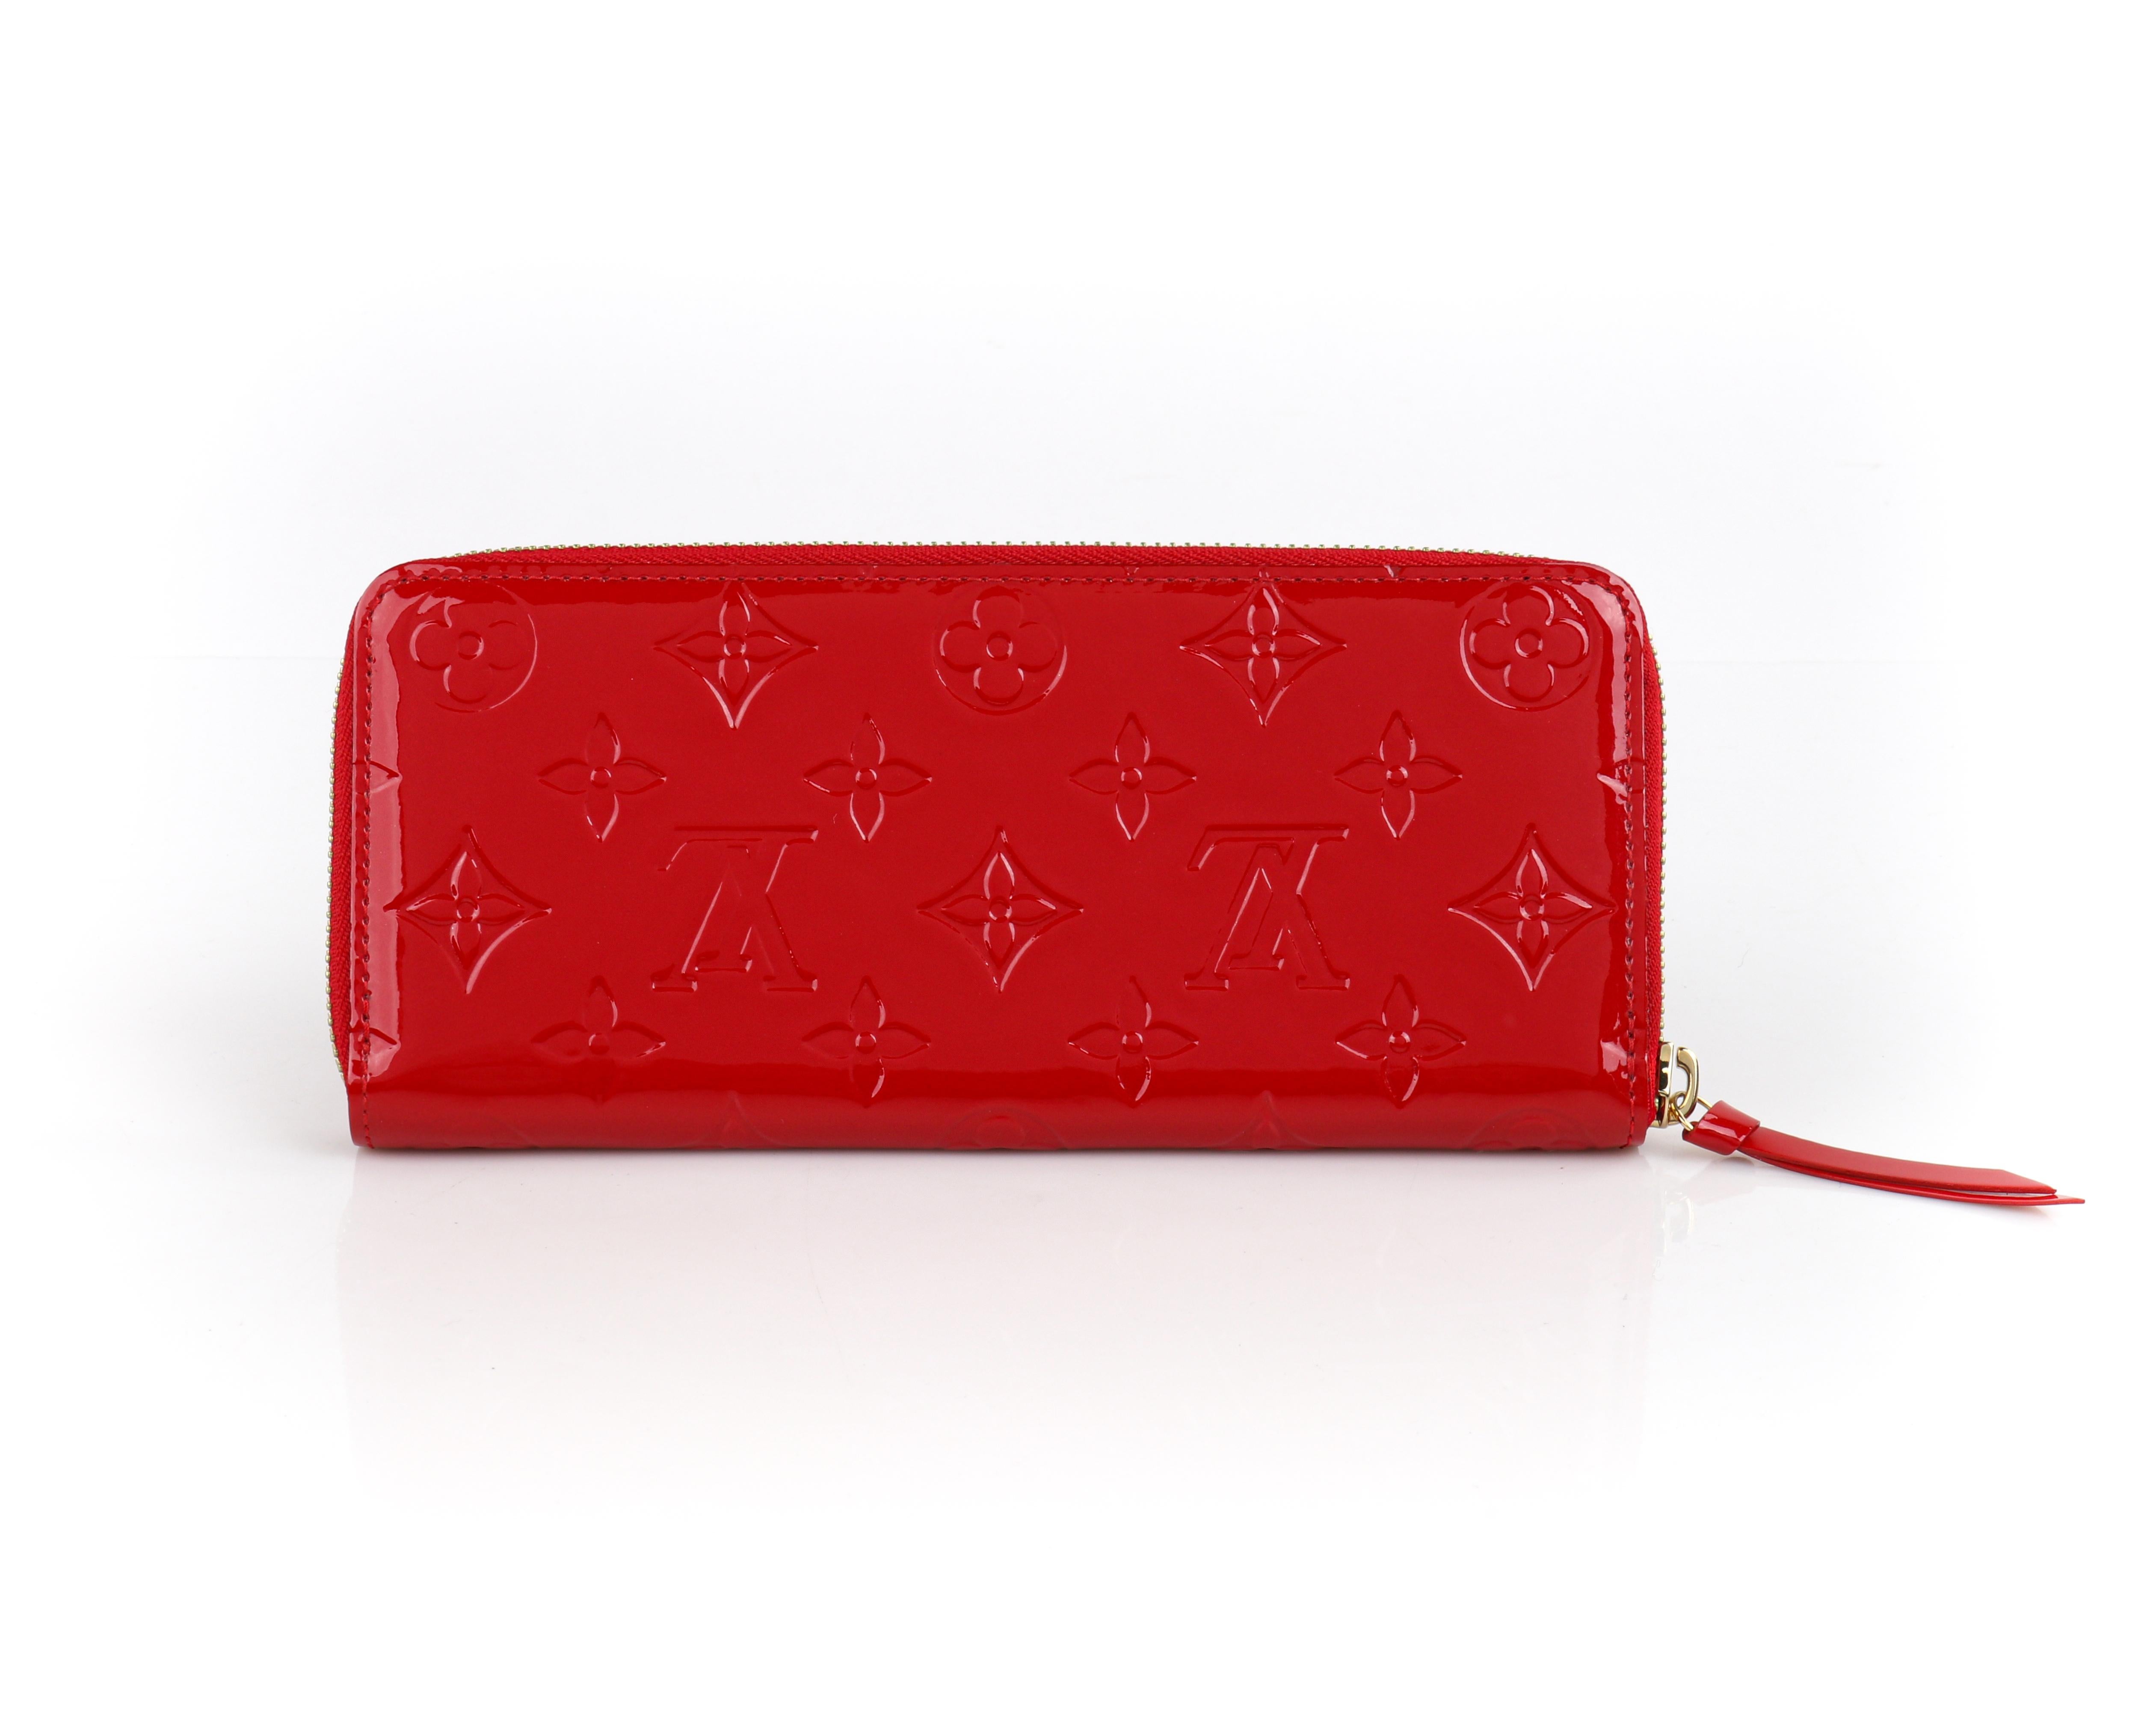 LOUIS VUITTON c.2015 “Clemence” Red Monogram Vernis Patent Leather Zippy Wallet 1